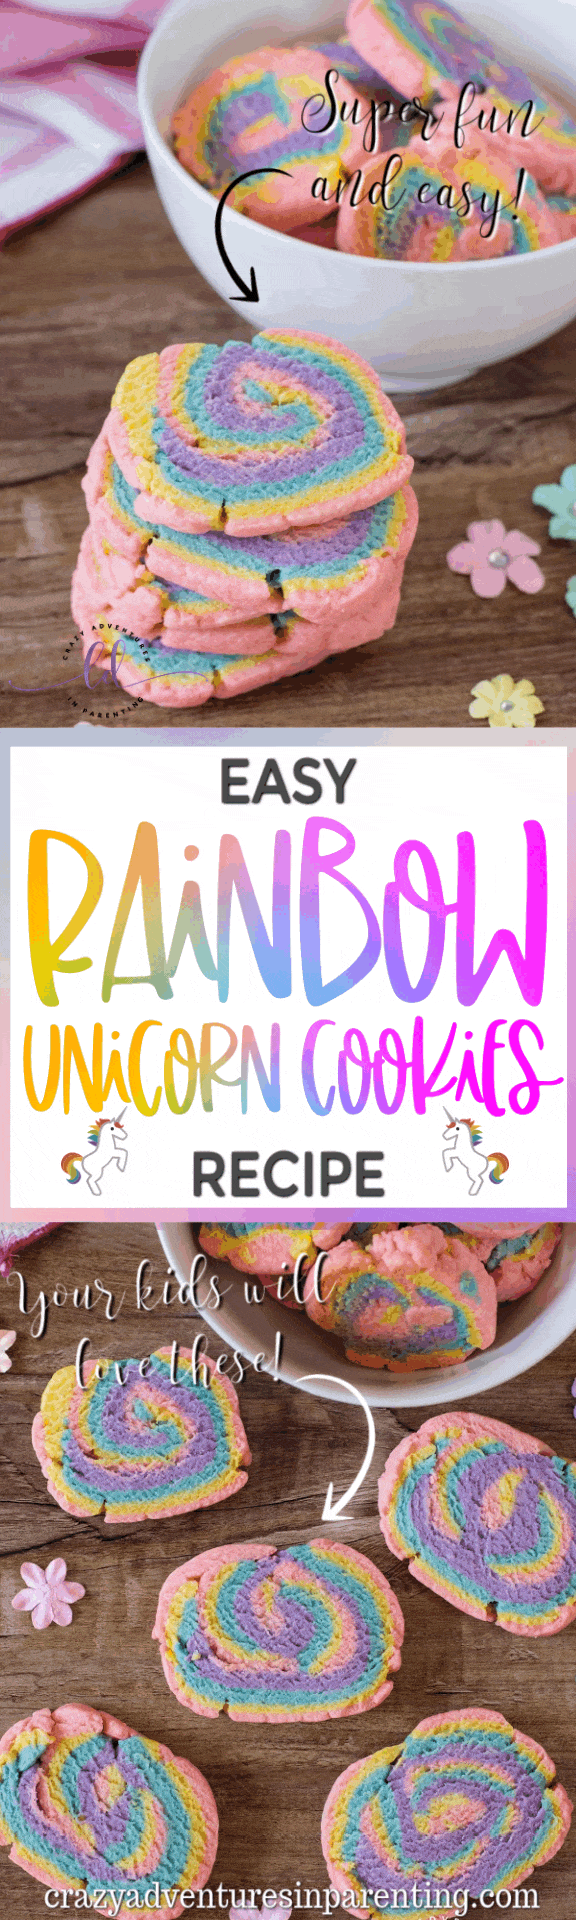 Fun and Easy Rainbow Unicorn Cookies Recipe